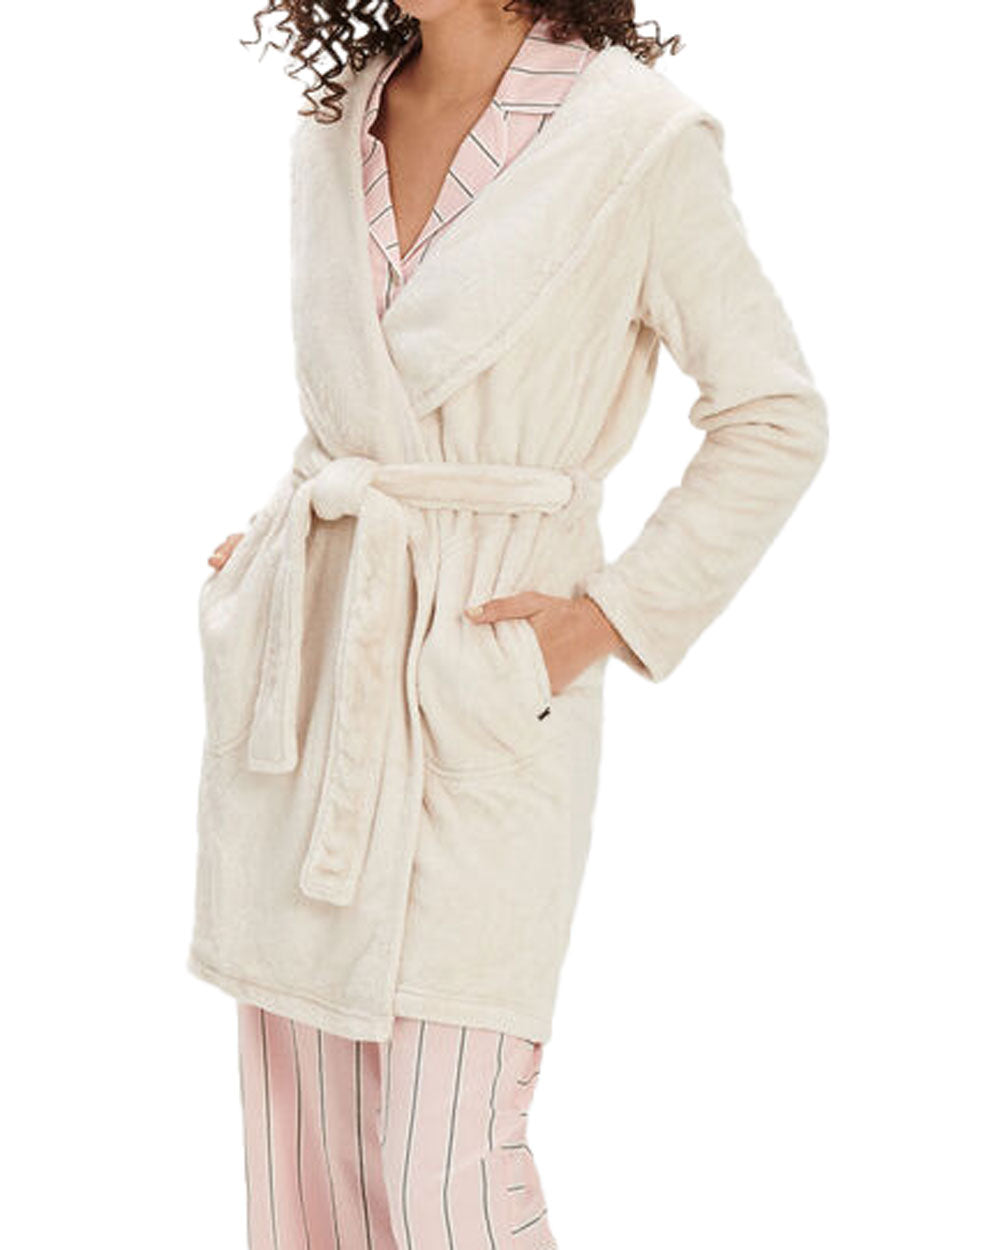 Miranda Fleece Robe in Moon Beam